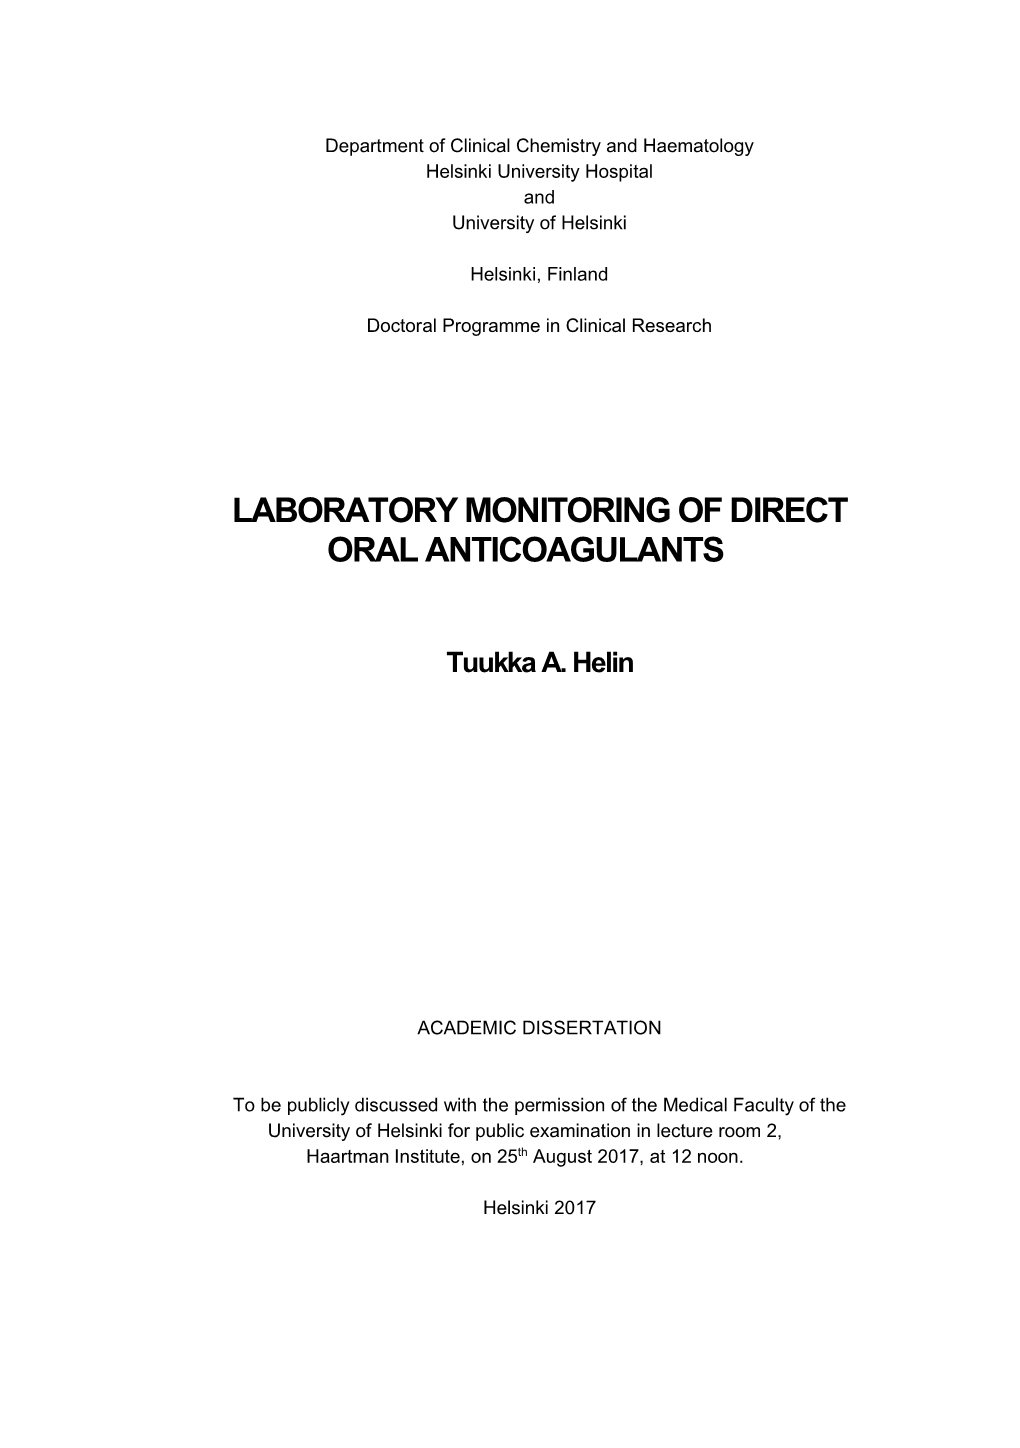 Laboratory Monitoring of Direct Oral Anticoagulants